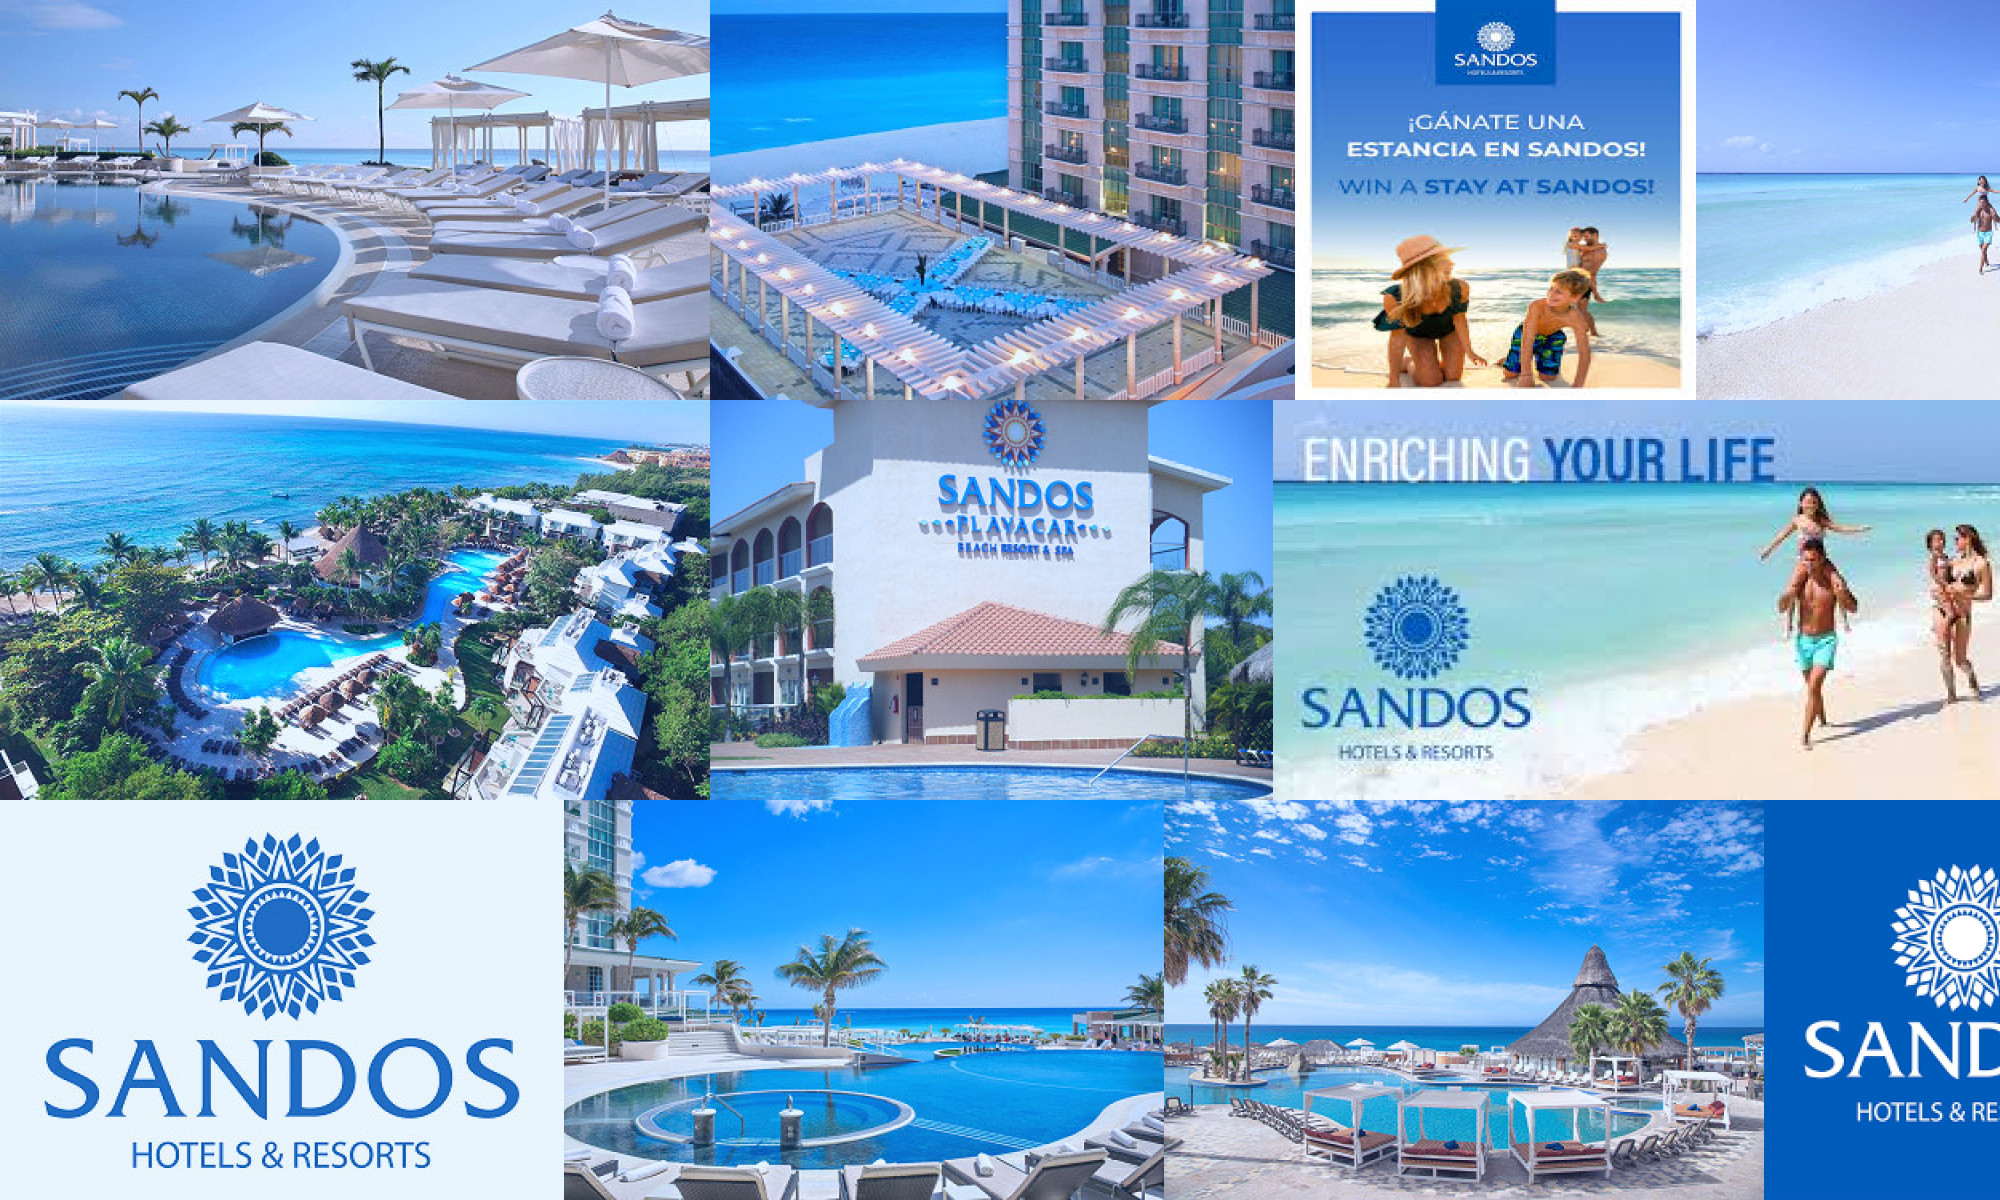 sandos hotels & resorts